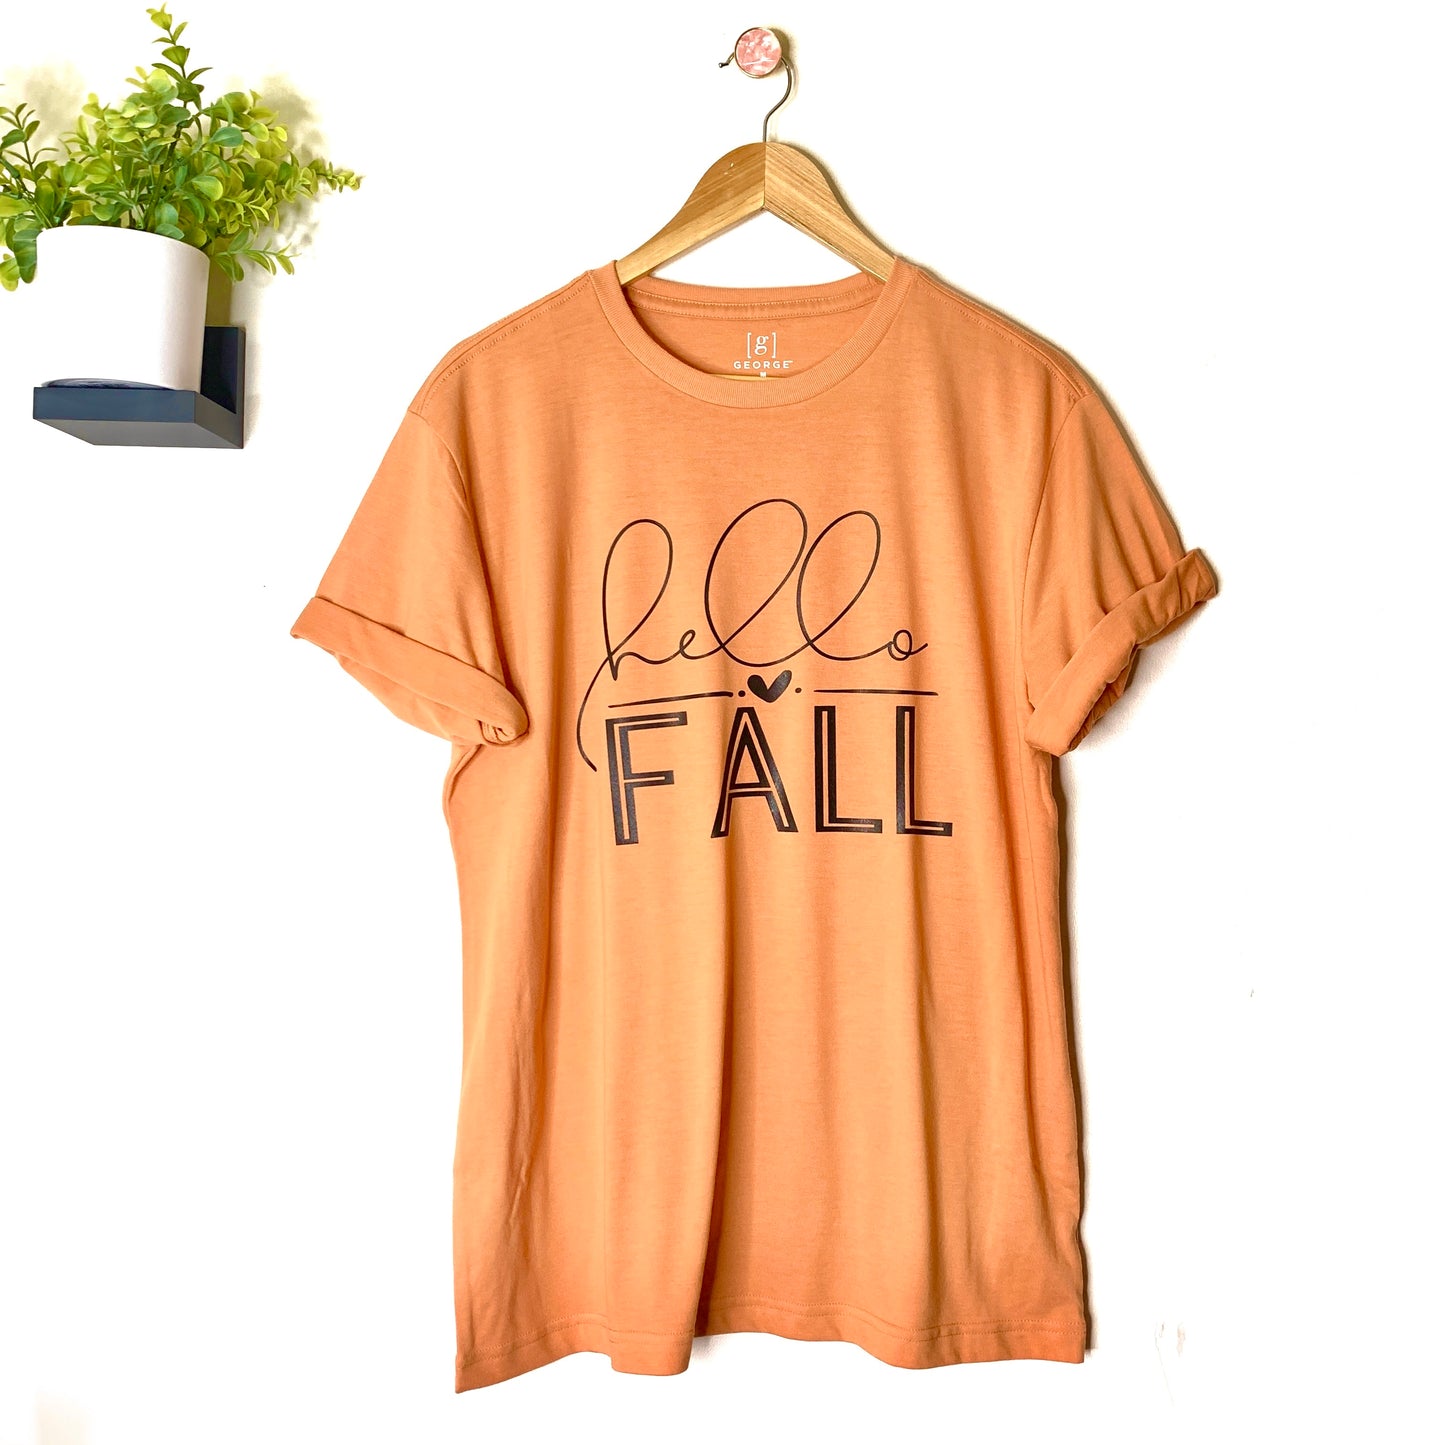 Hello Fall Orange Short Sleeve Tee